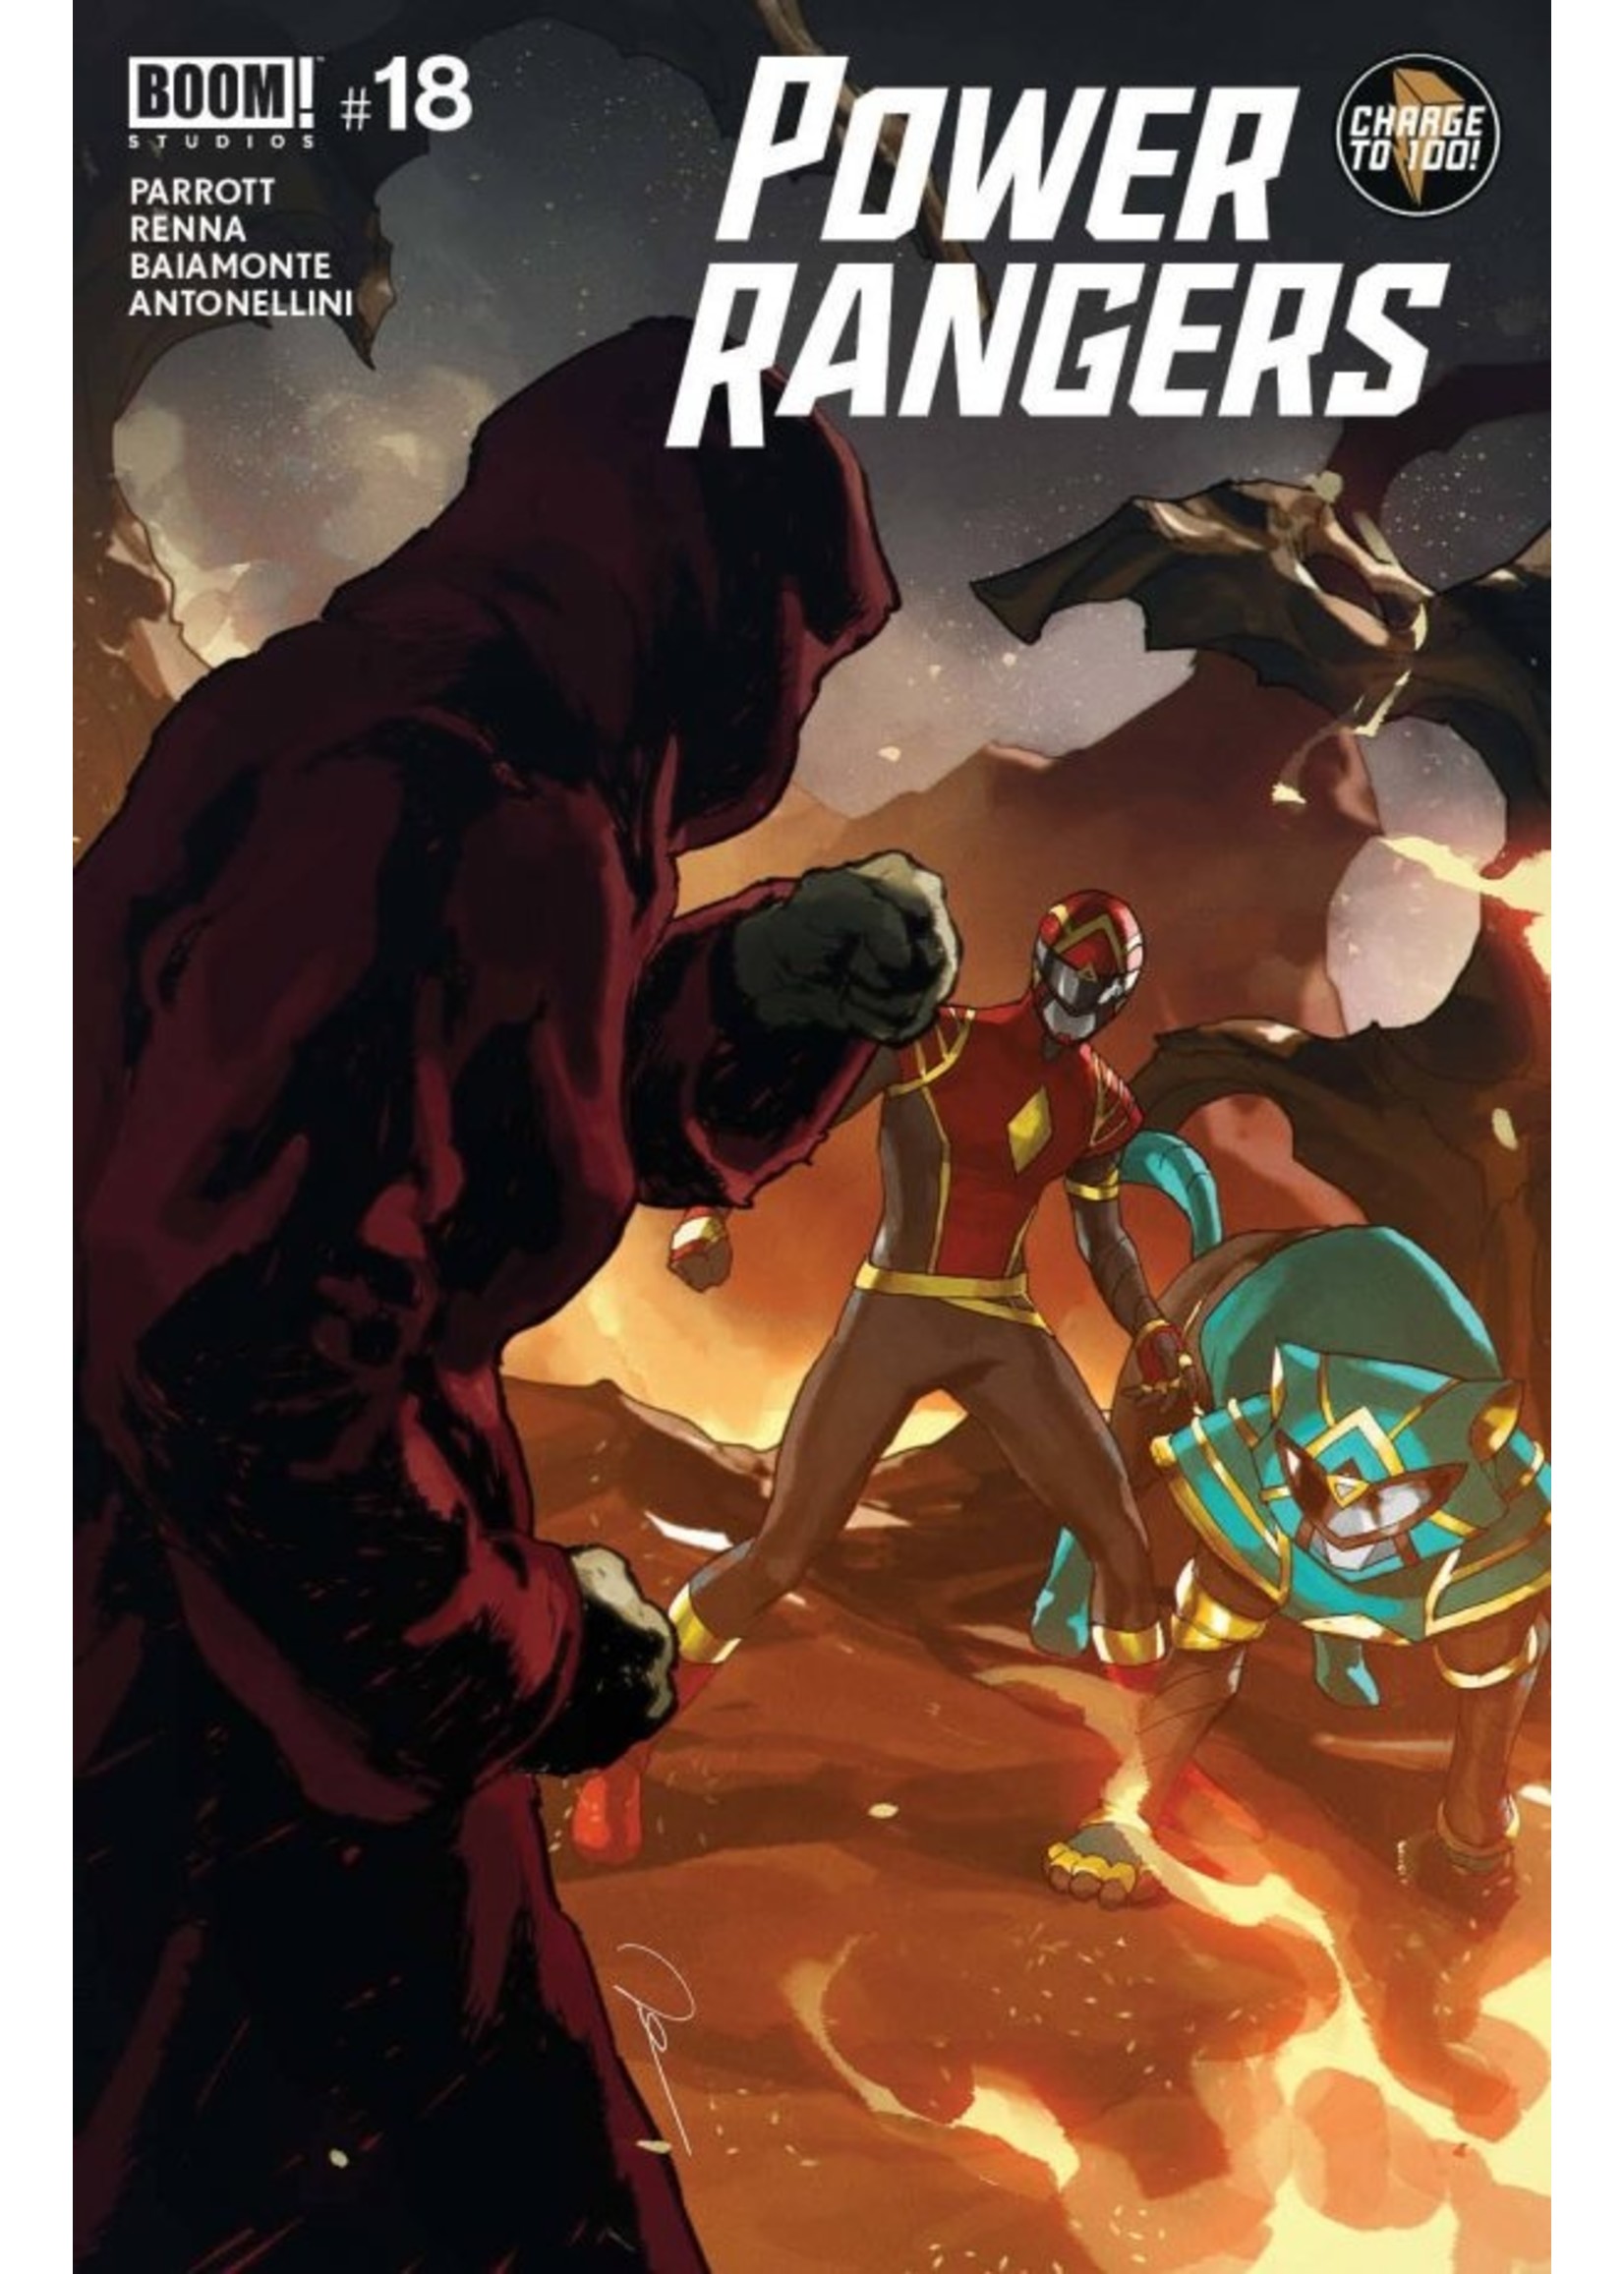 Power Rangers Power Rangers #18